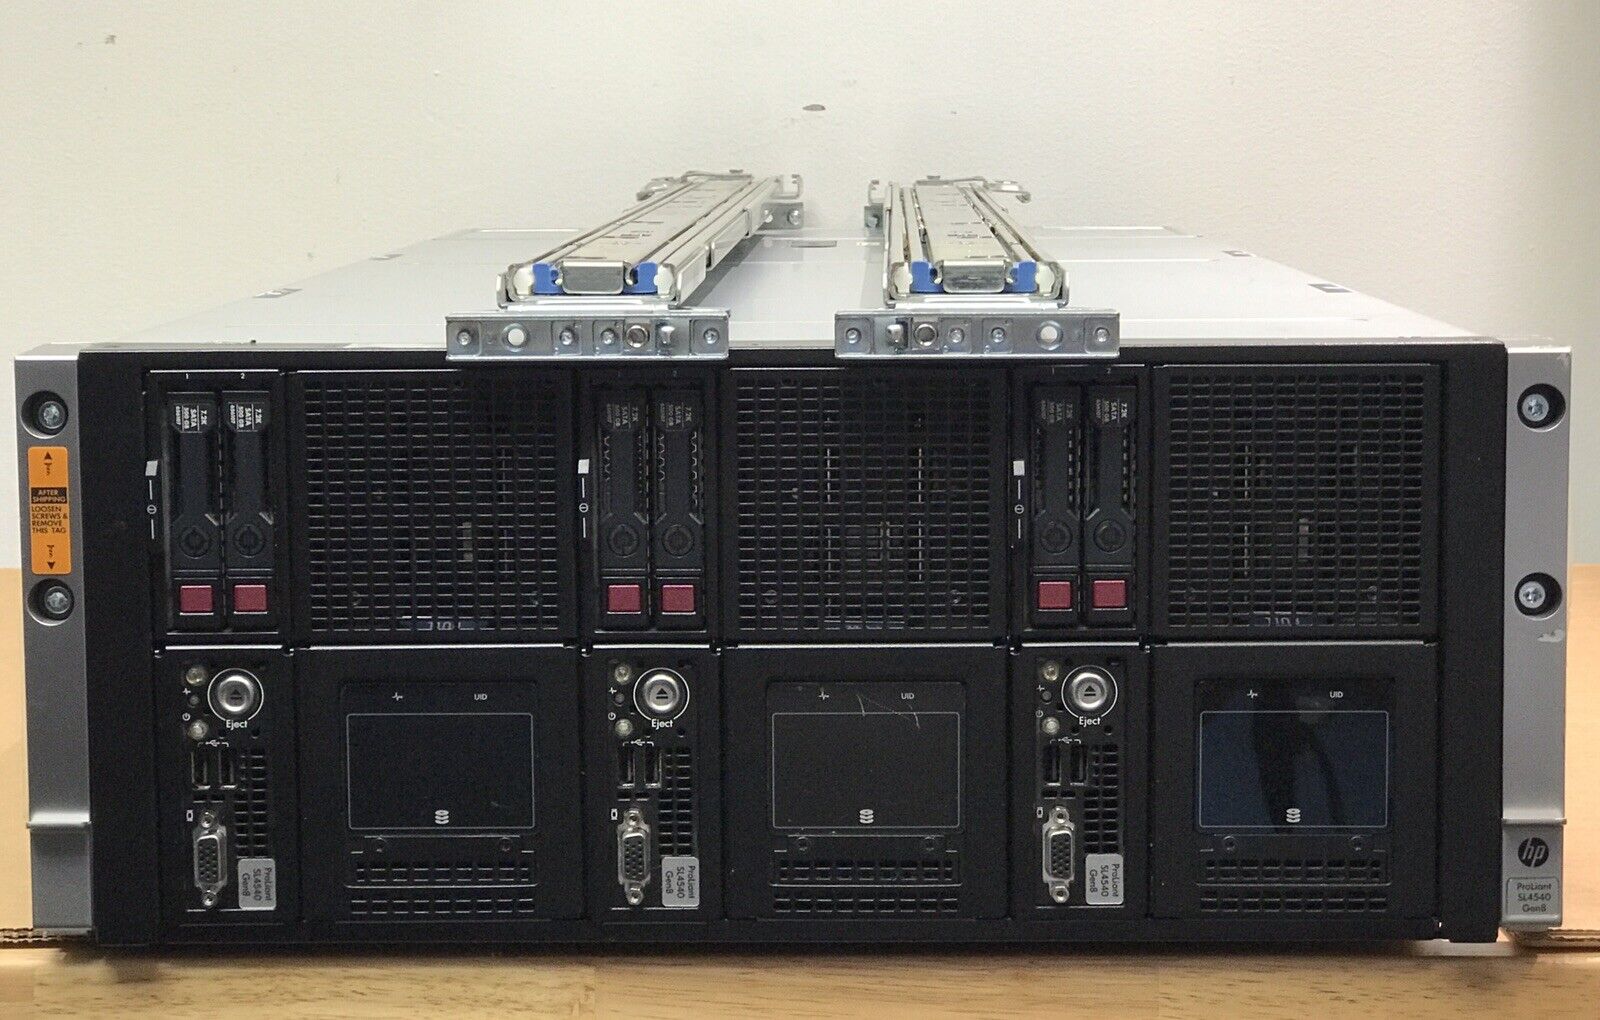 HP SL4540 G8 3x15 6x E5-2470V2 576GB 6x 500GB 45x 2TB SAS 7.2K Rails 4xPSU 3x IO